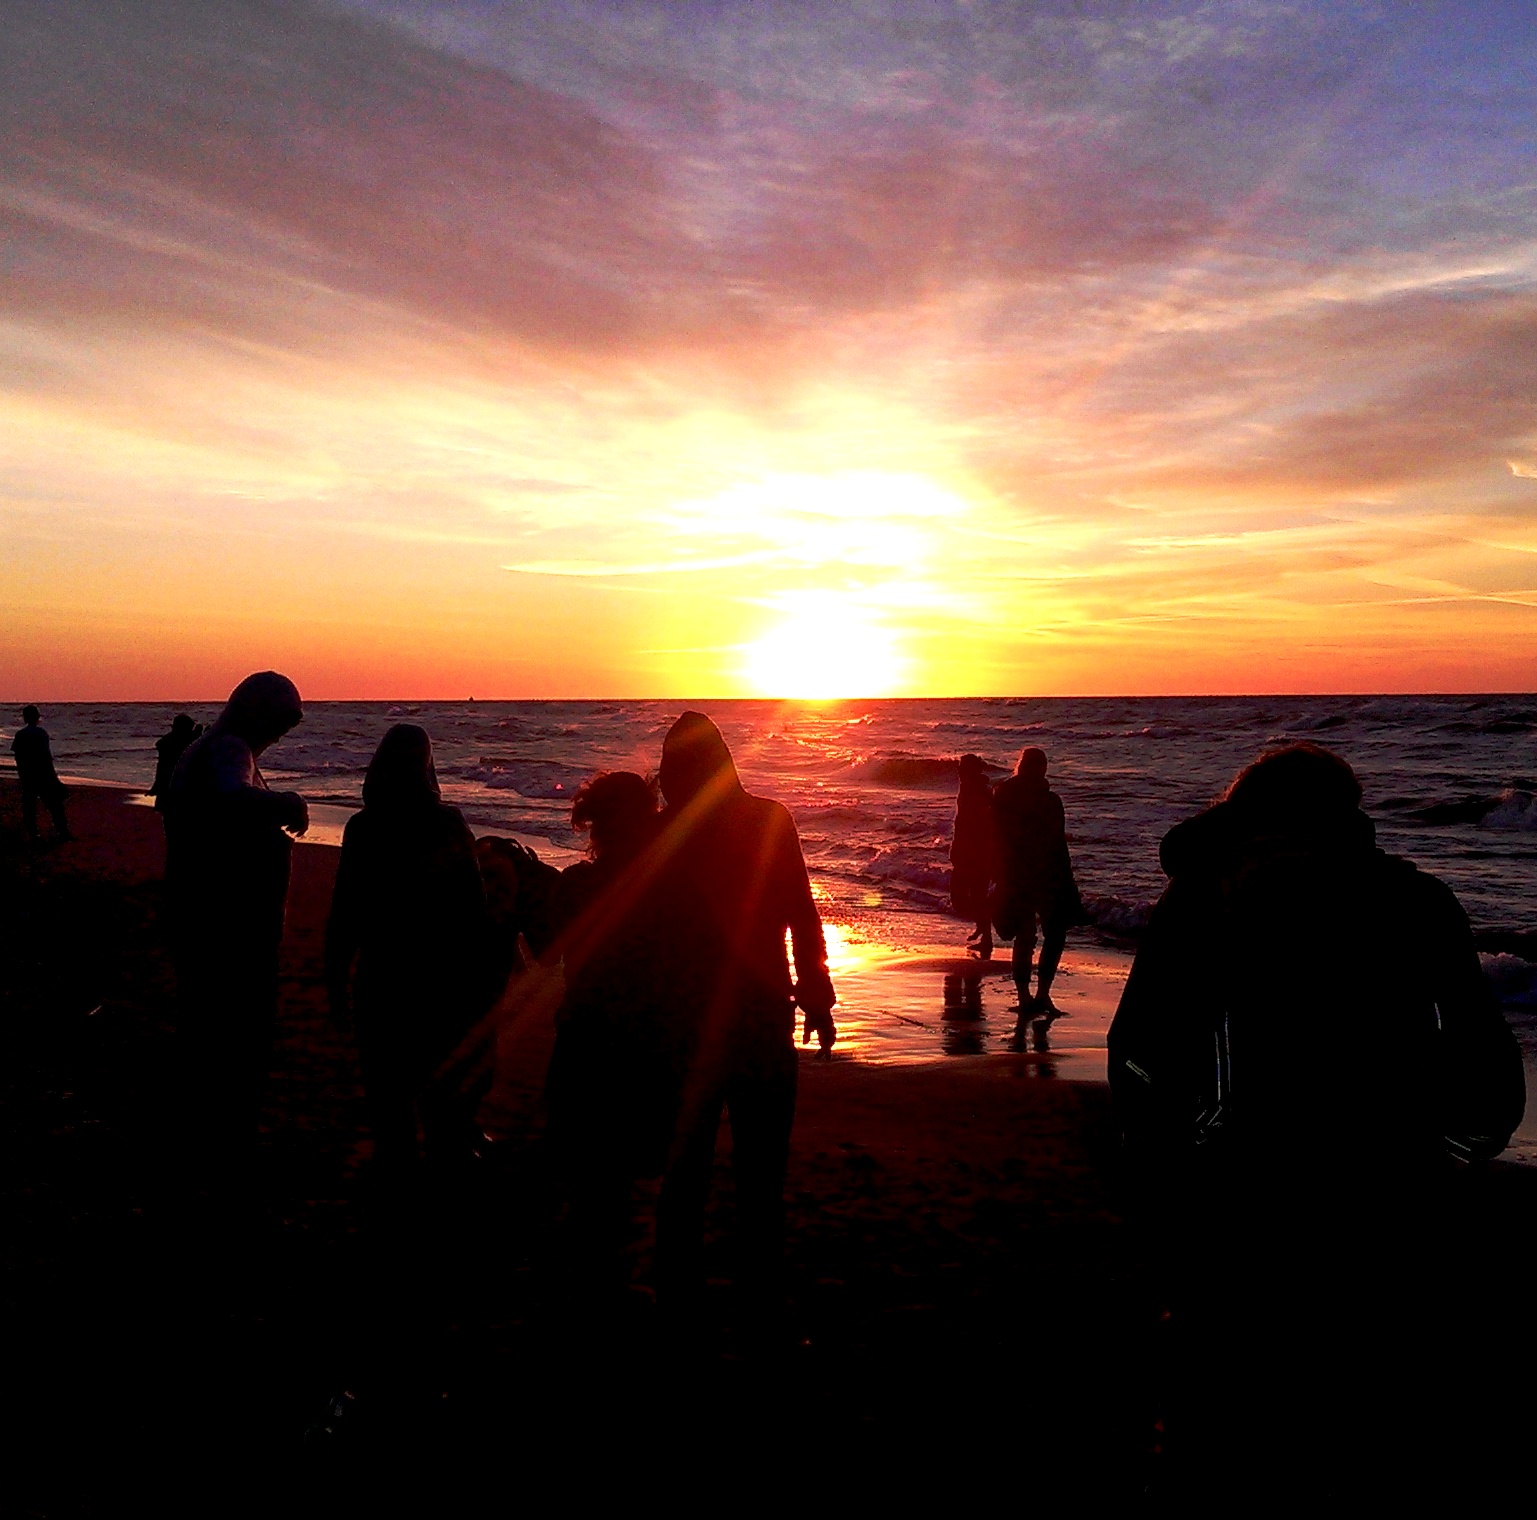 Plötzlich am Meer Festival in Polen: Romantischer Sonnenuntergang inklusive